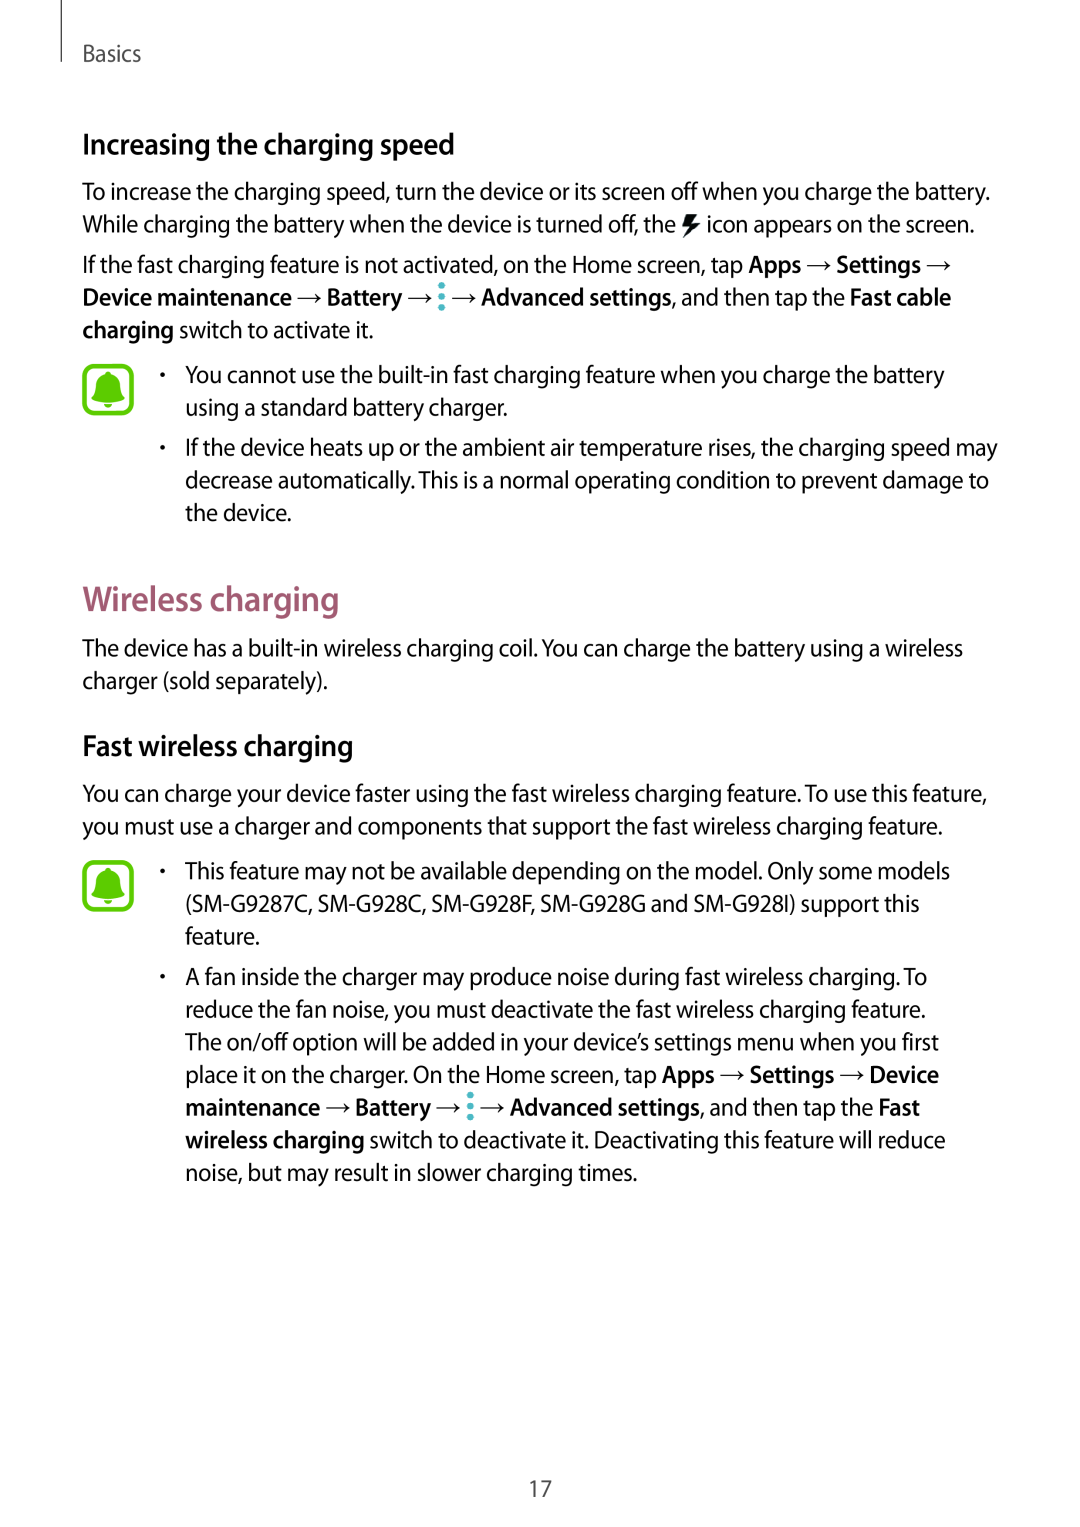 Samsung SM-G925FZDEXEF, SM-G925FZKADBT Wireless charging, Increasing the charging speed, Fast wireless charging, Basics 